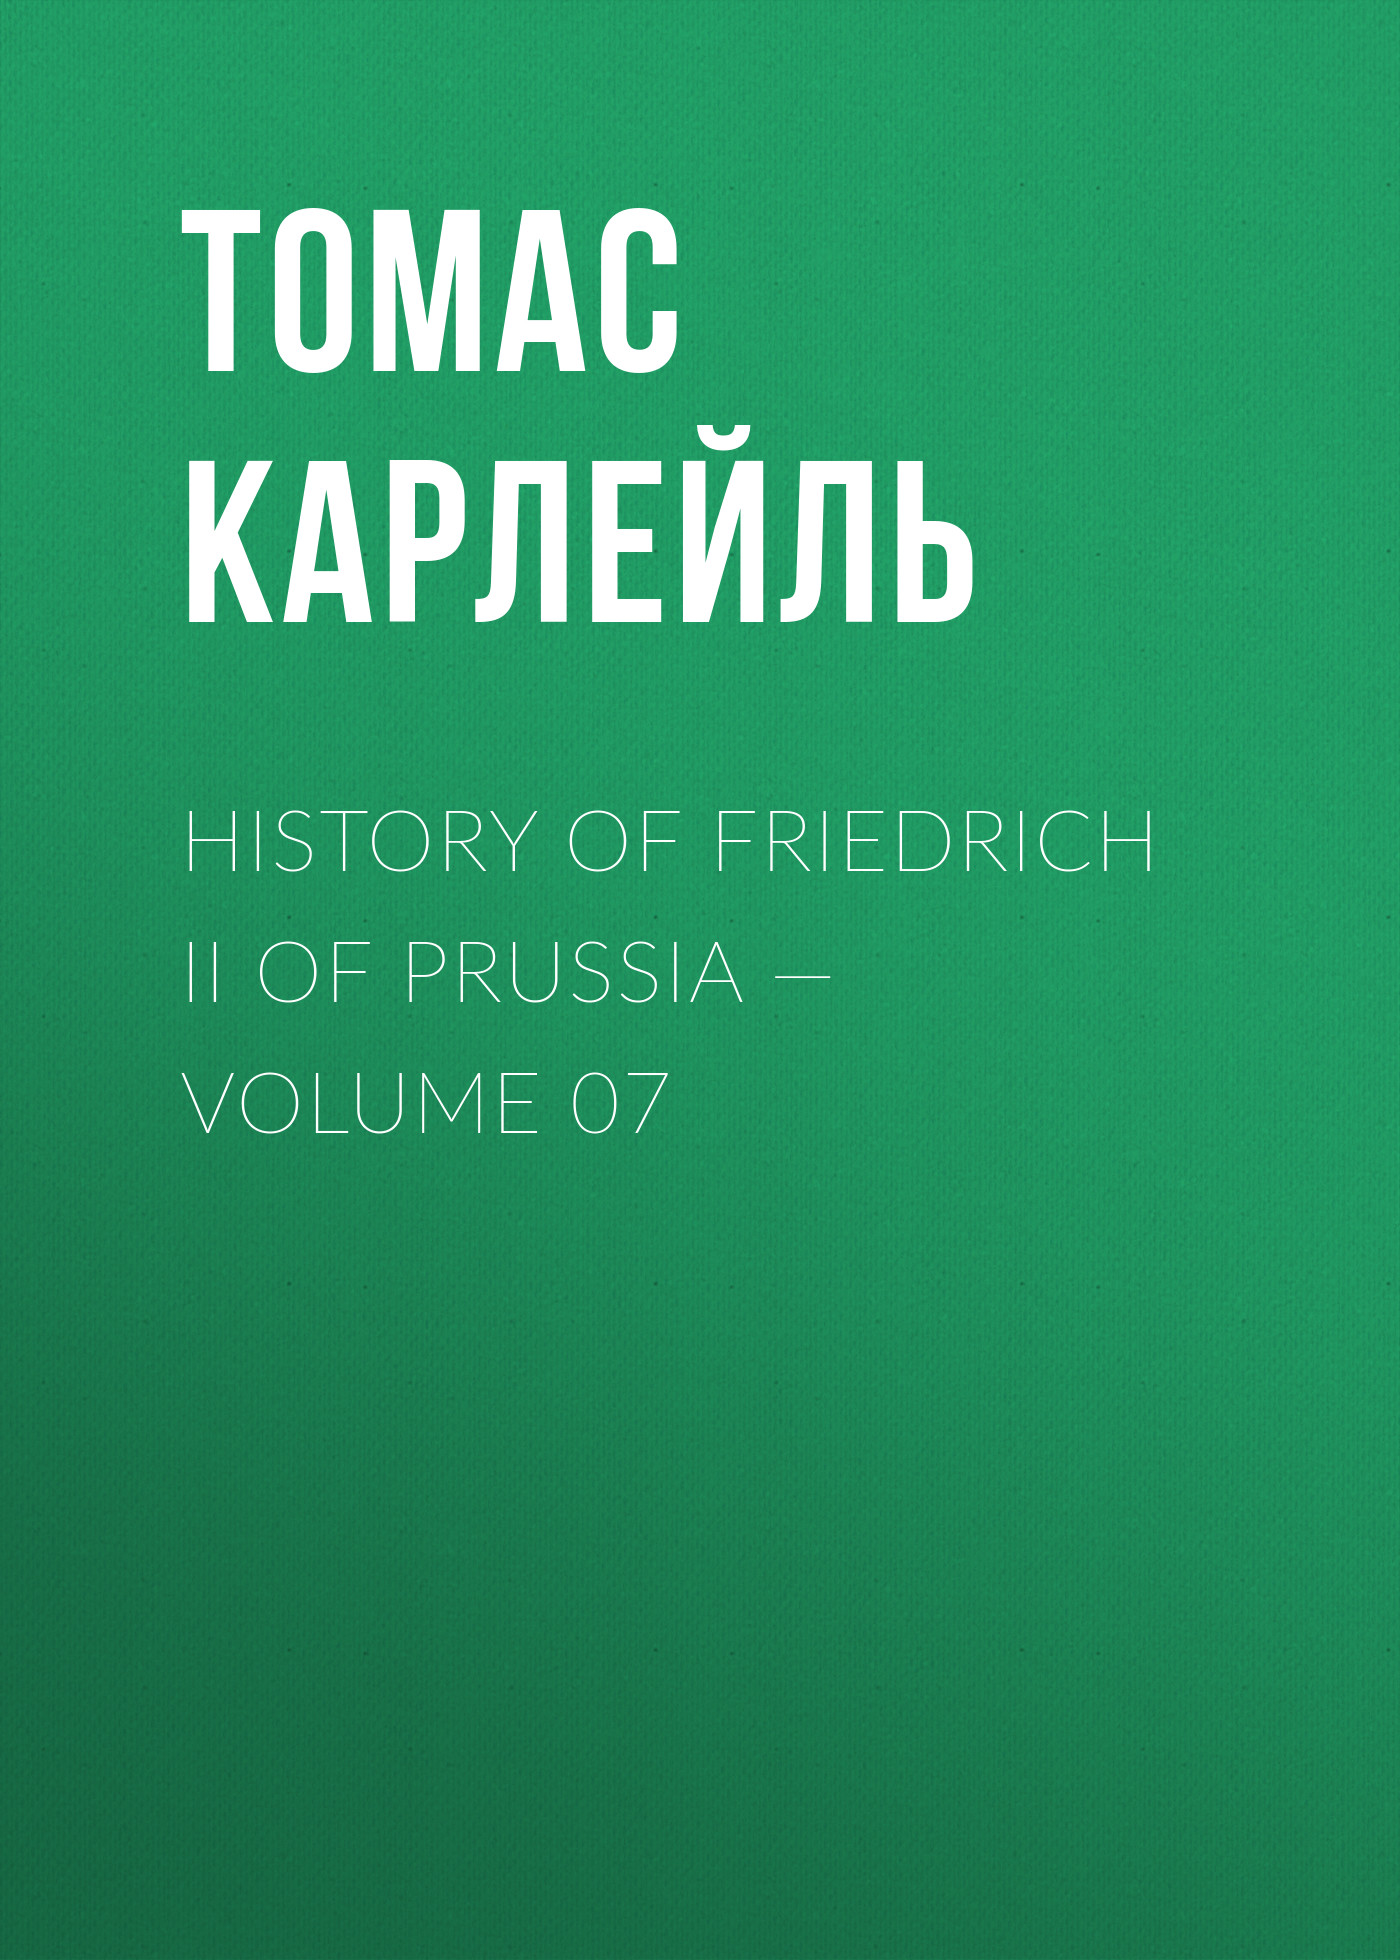 History of Friedrich II of Prussia— Volume 07